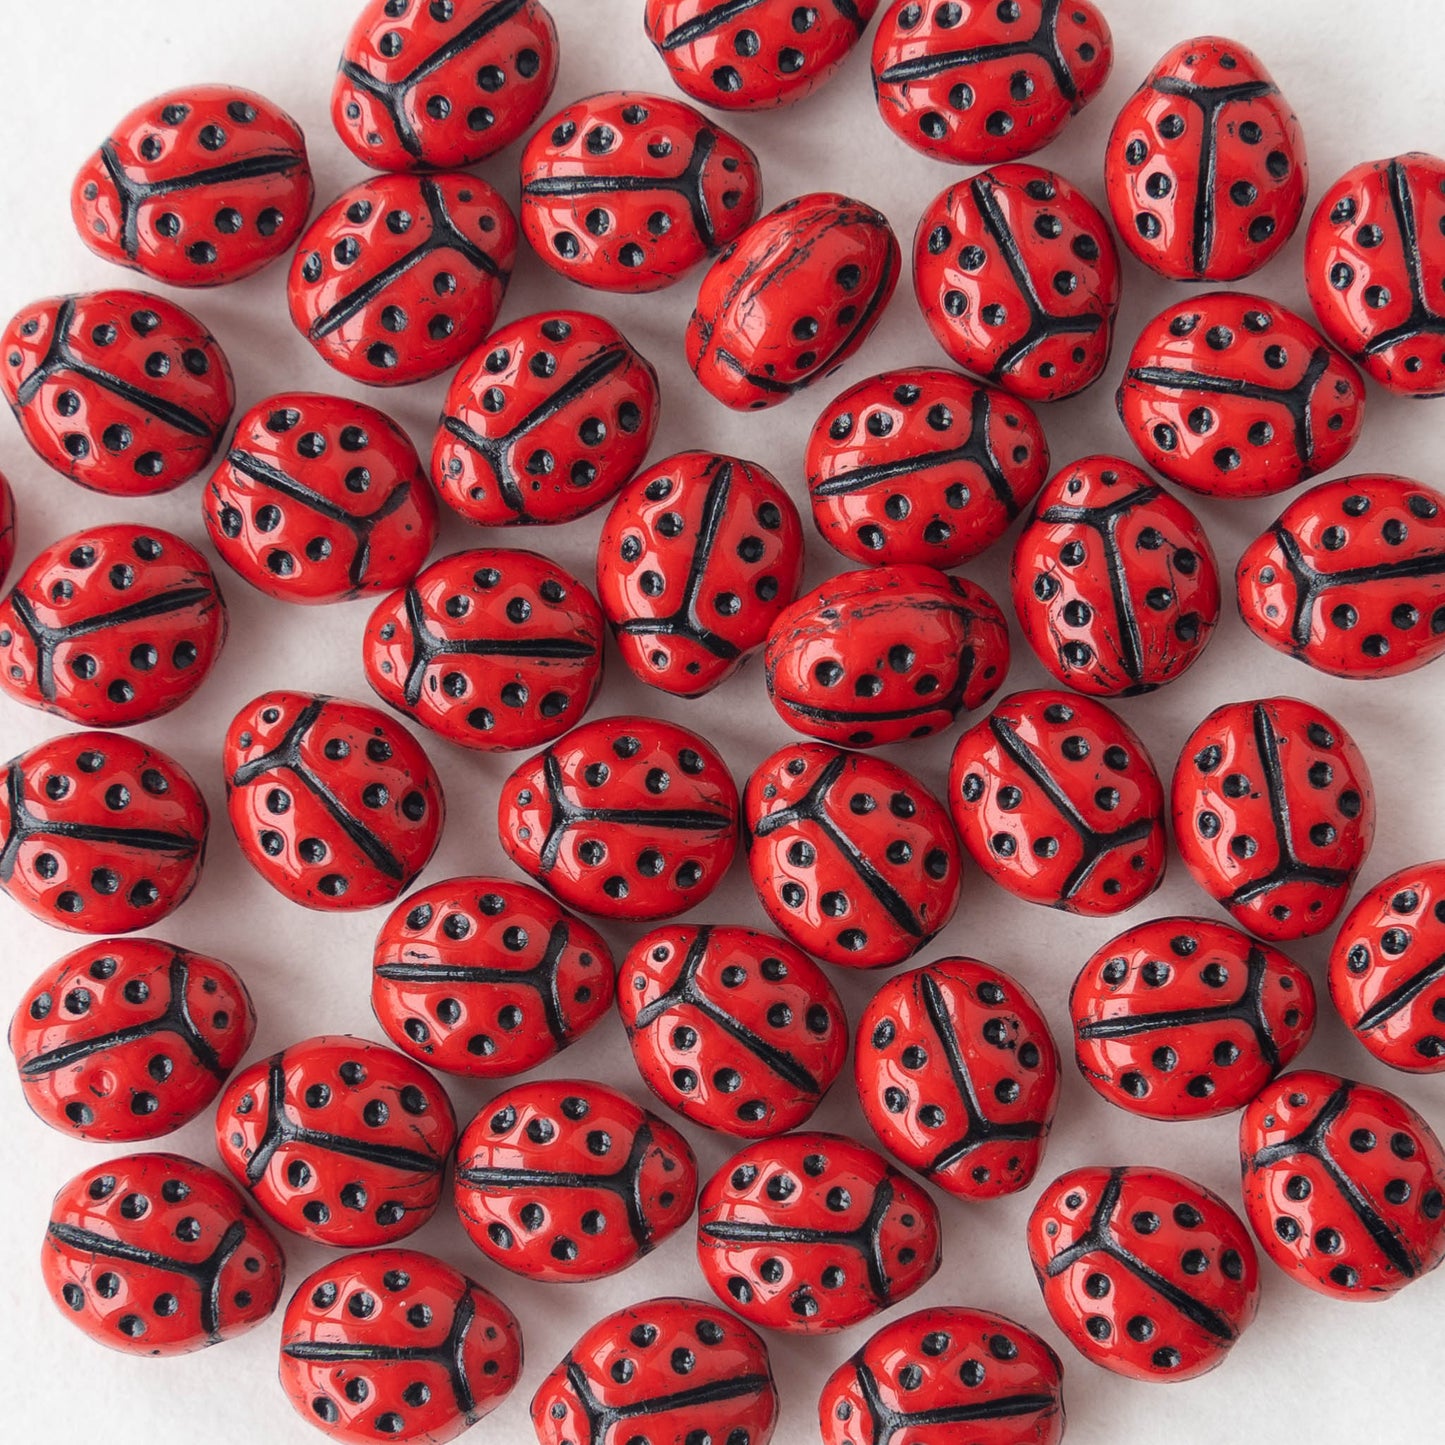 Ladybug Beads - Red with Black - 20